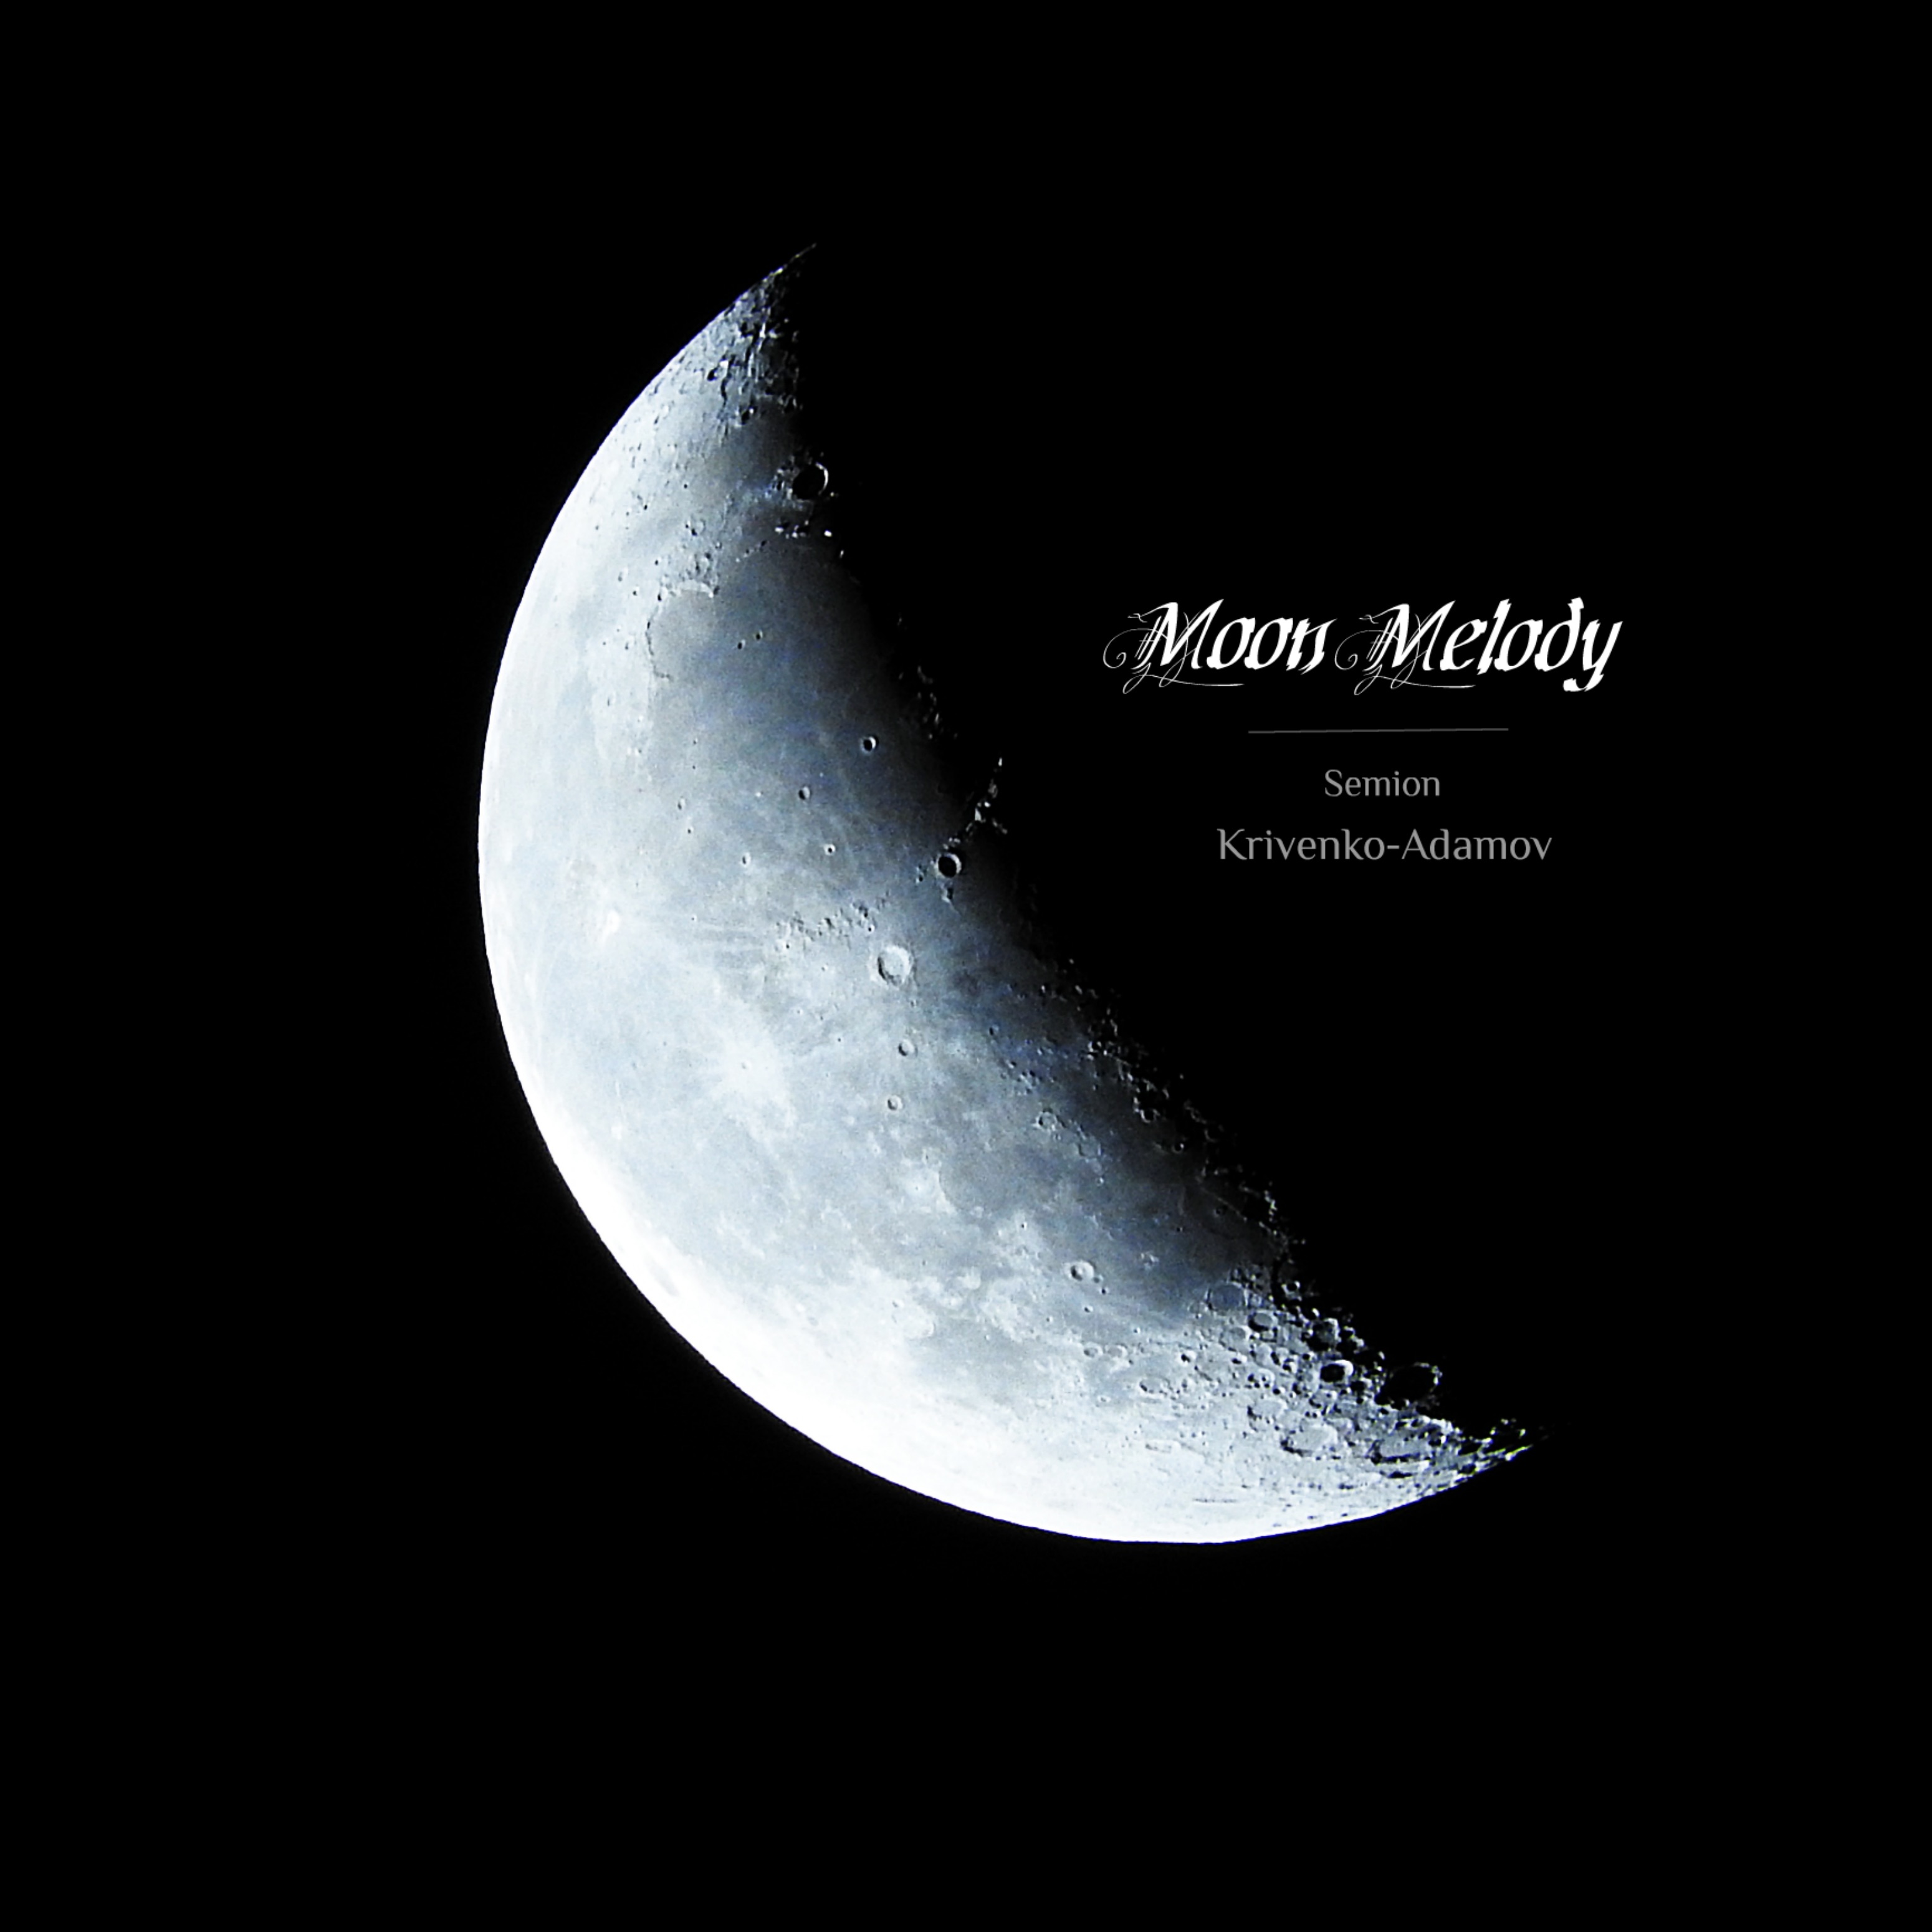 Melody moon